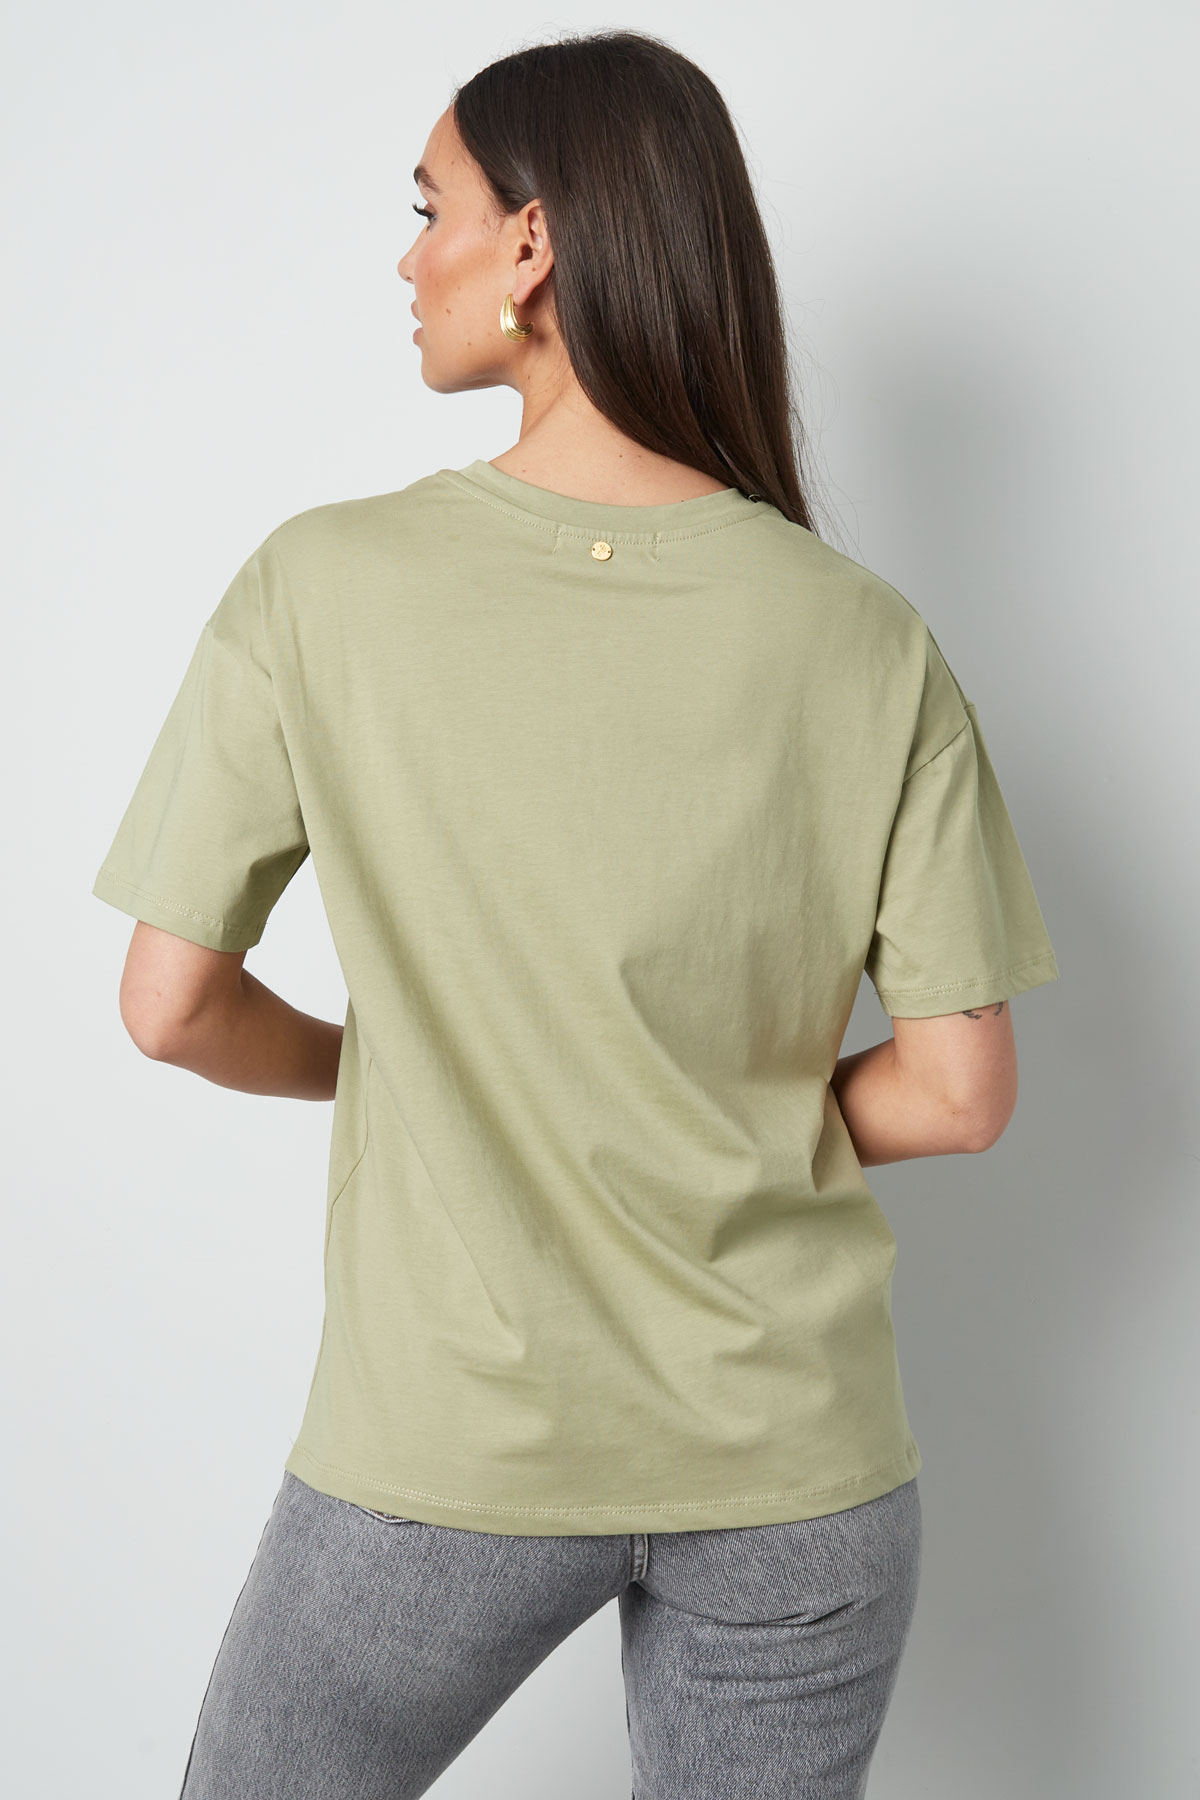 T-shirt ma perle - groen h5 Afbeelding6